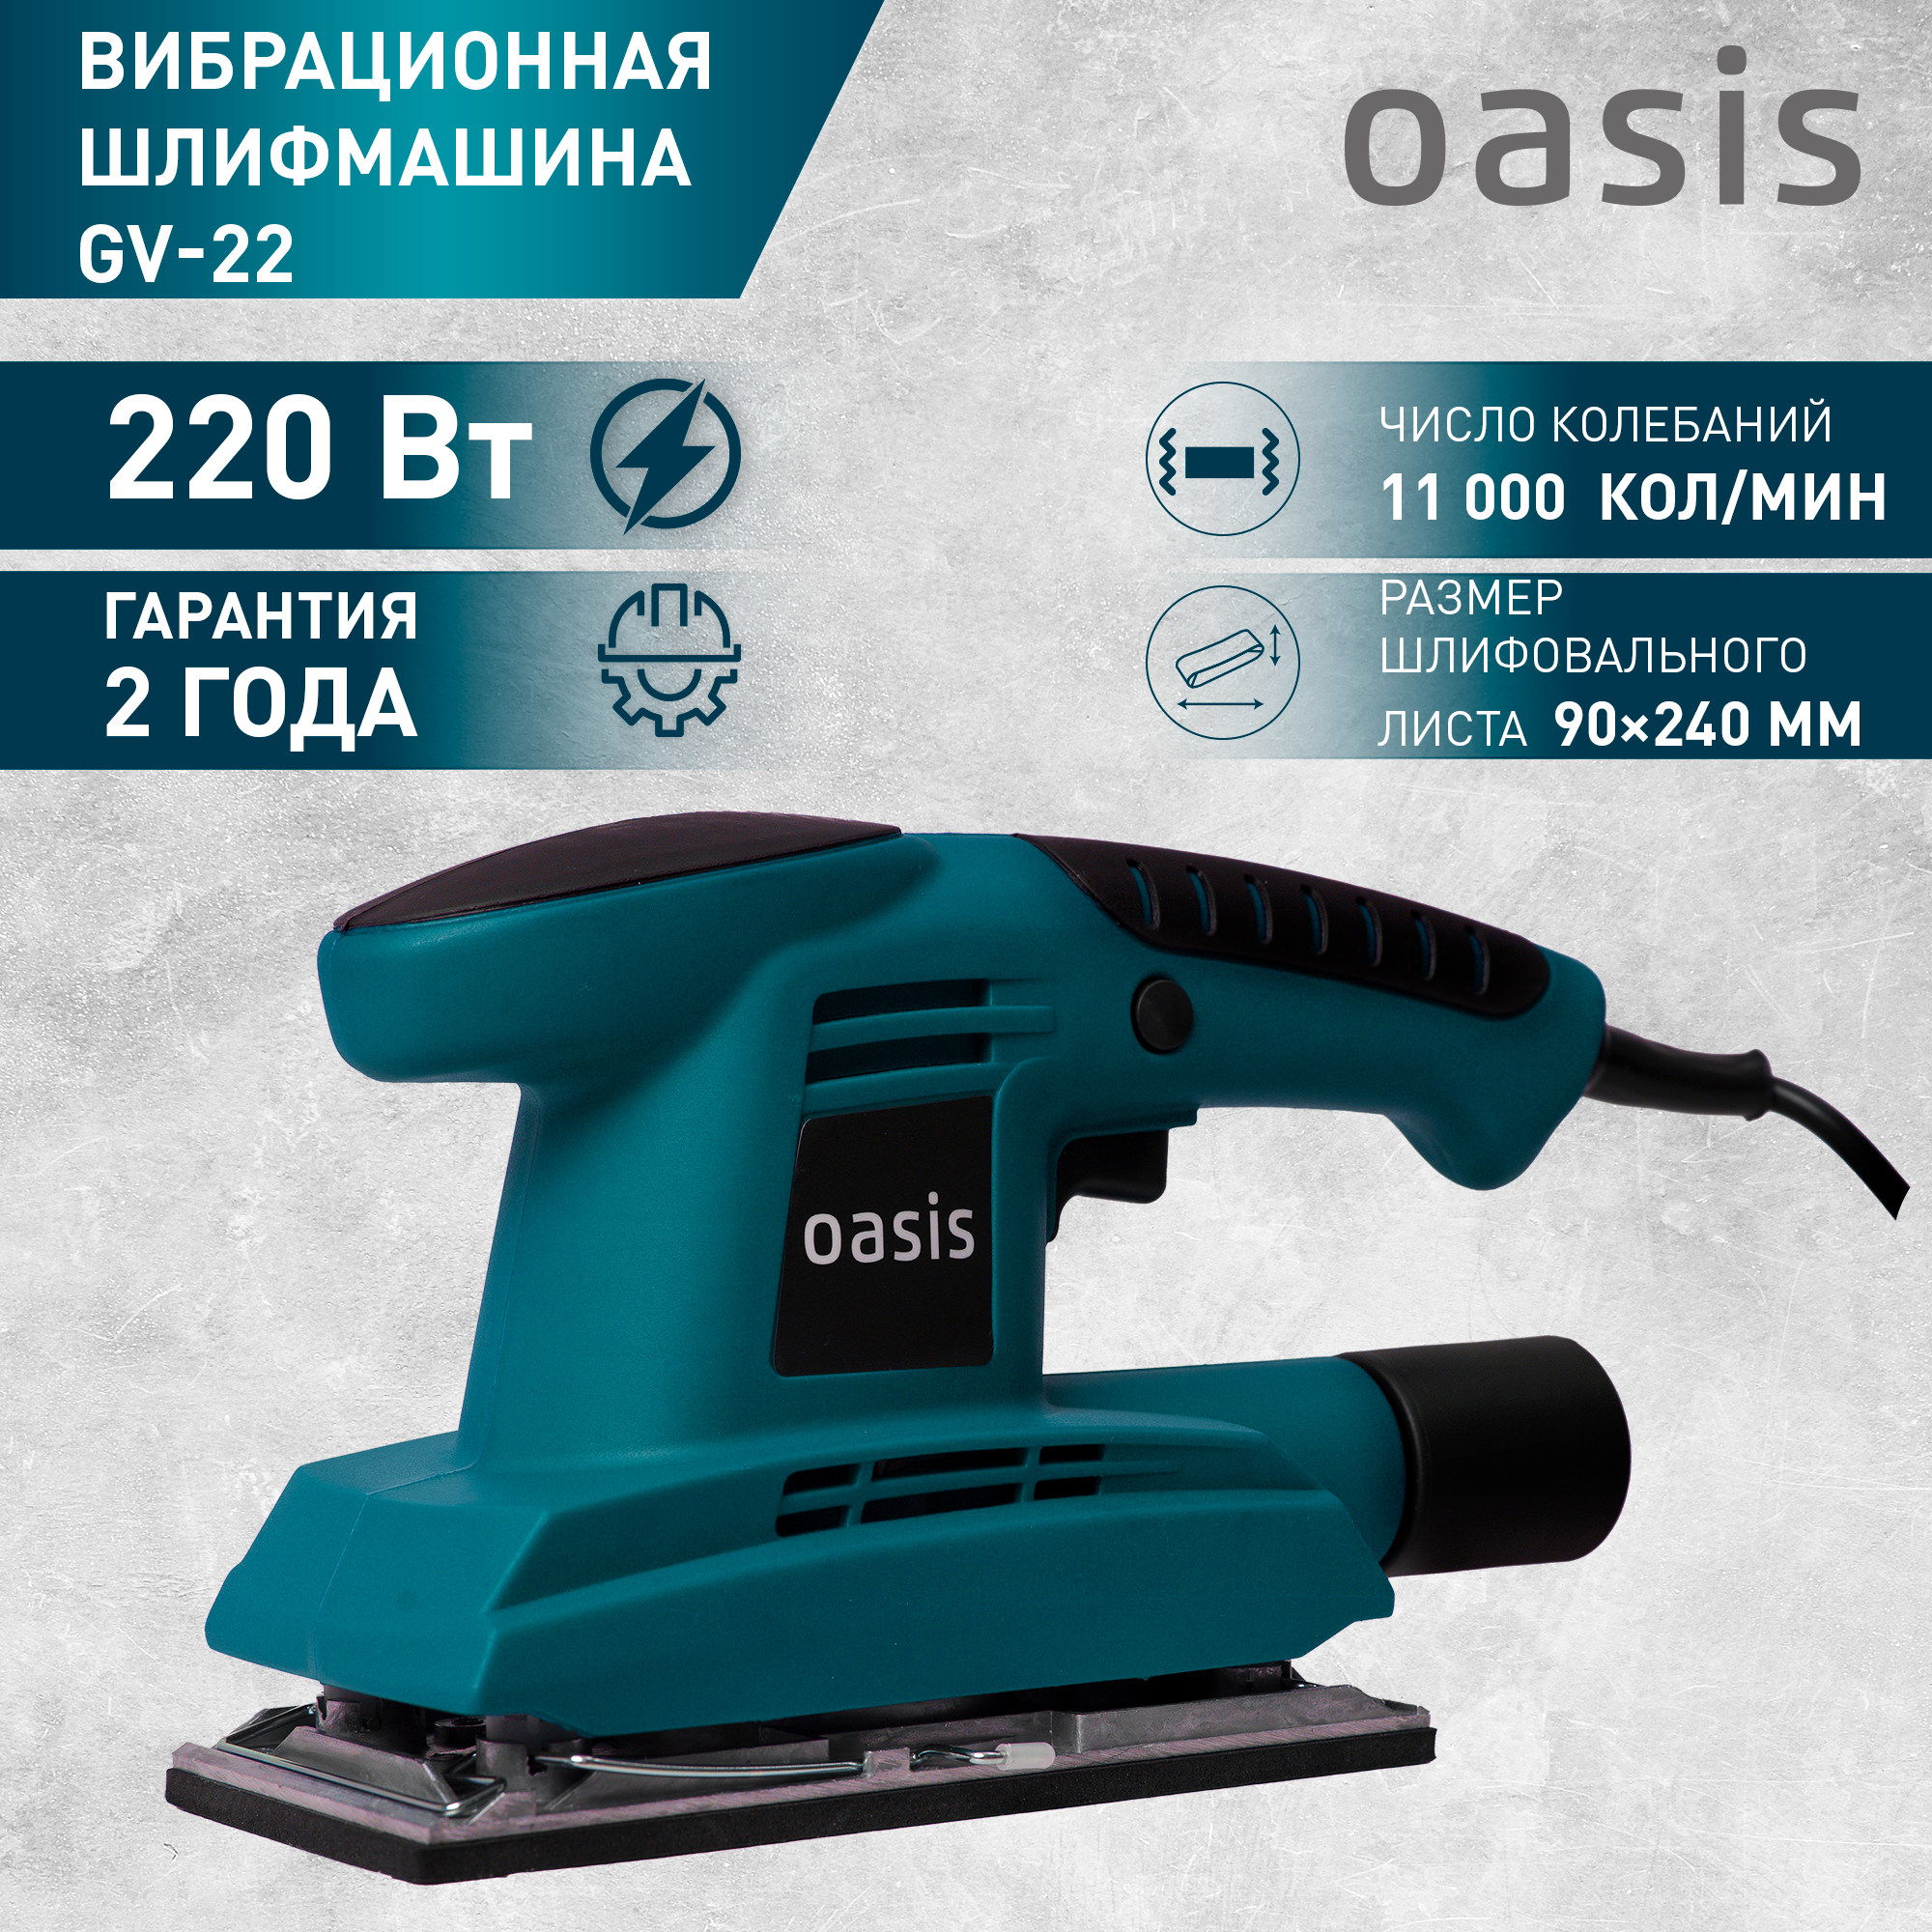 Oasis GV-22